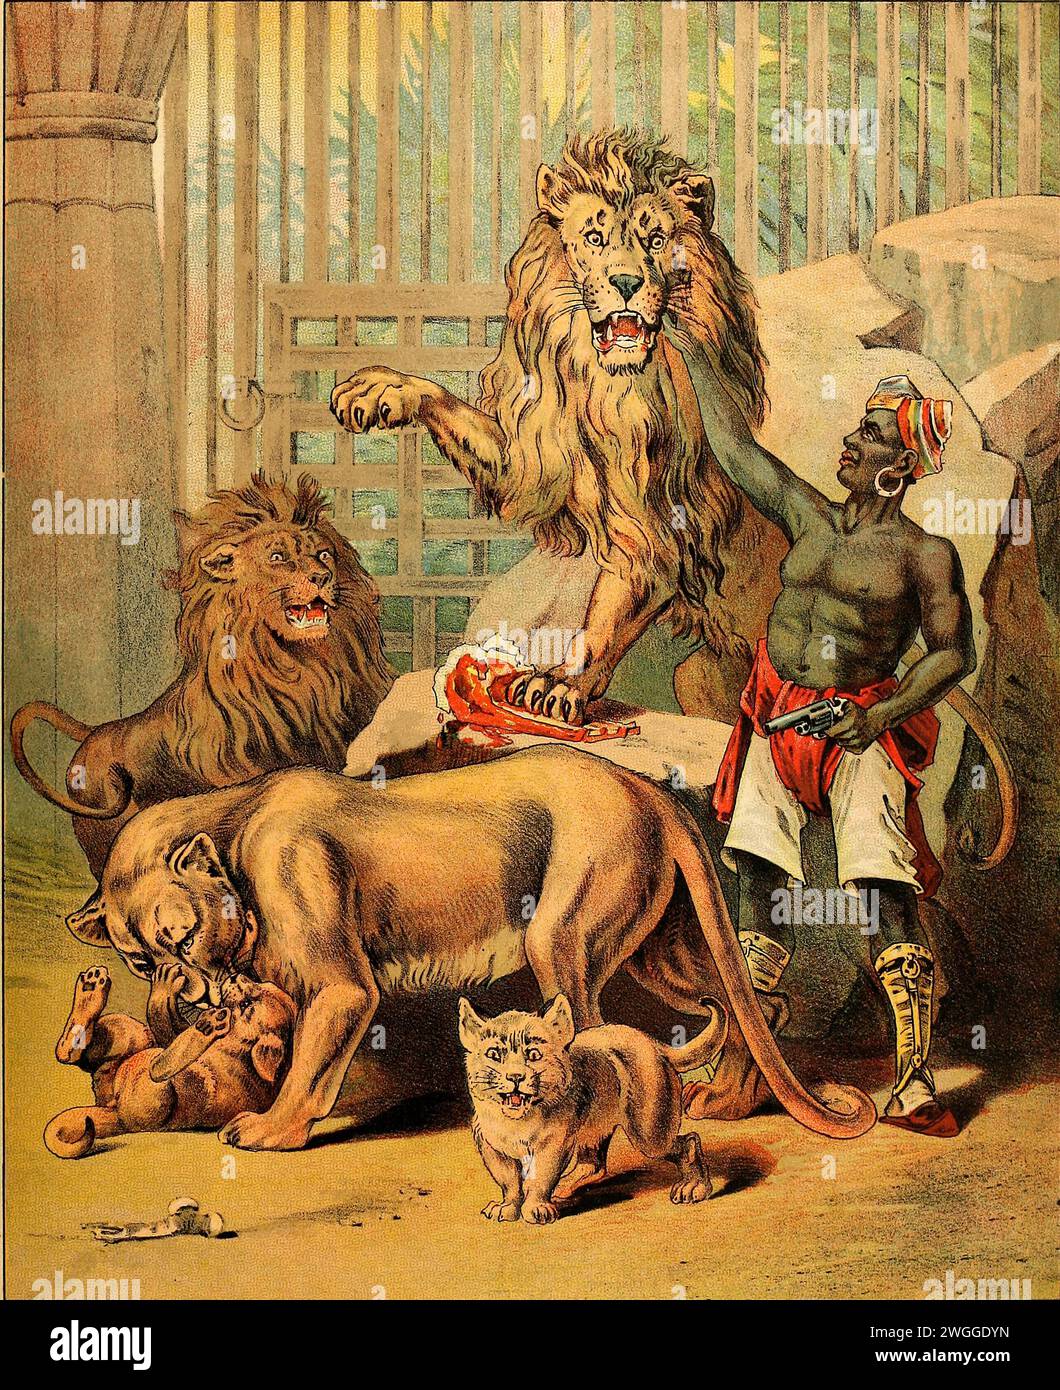 Barnum's menagerie 1888 - Tamer of lions Stock Photo